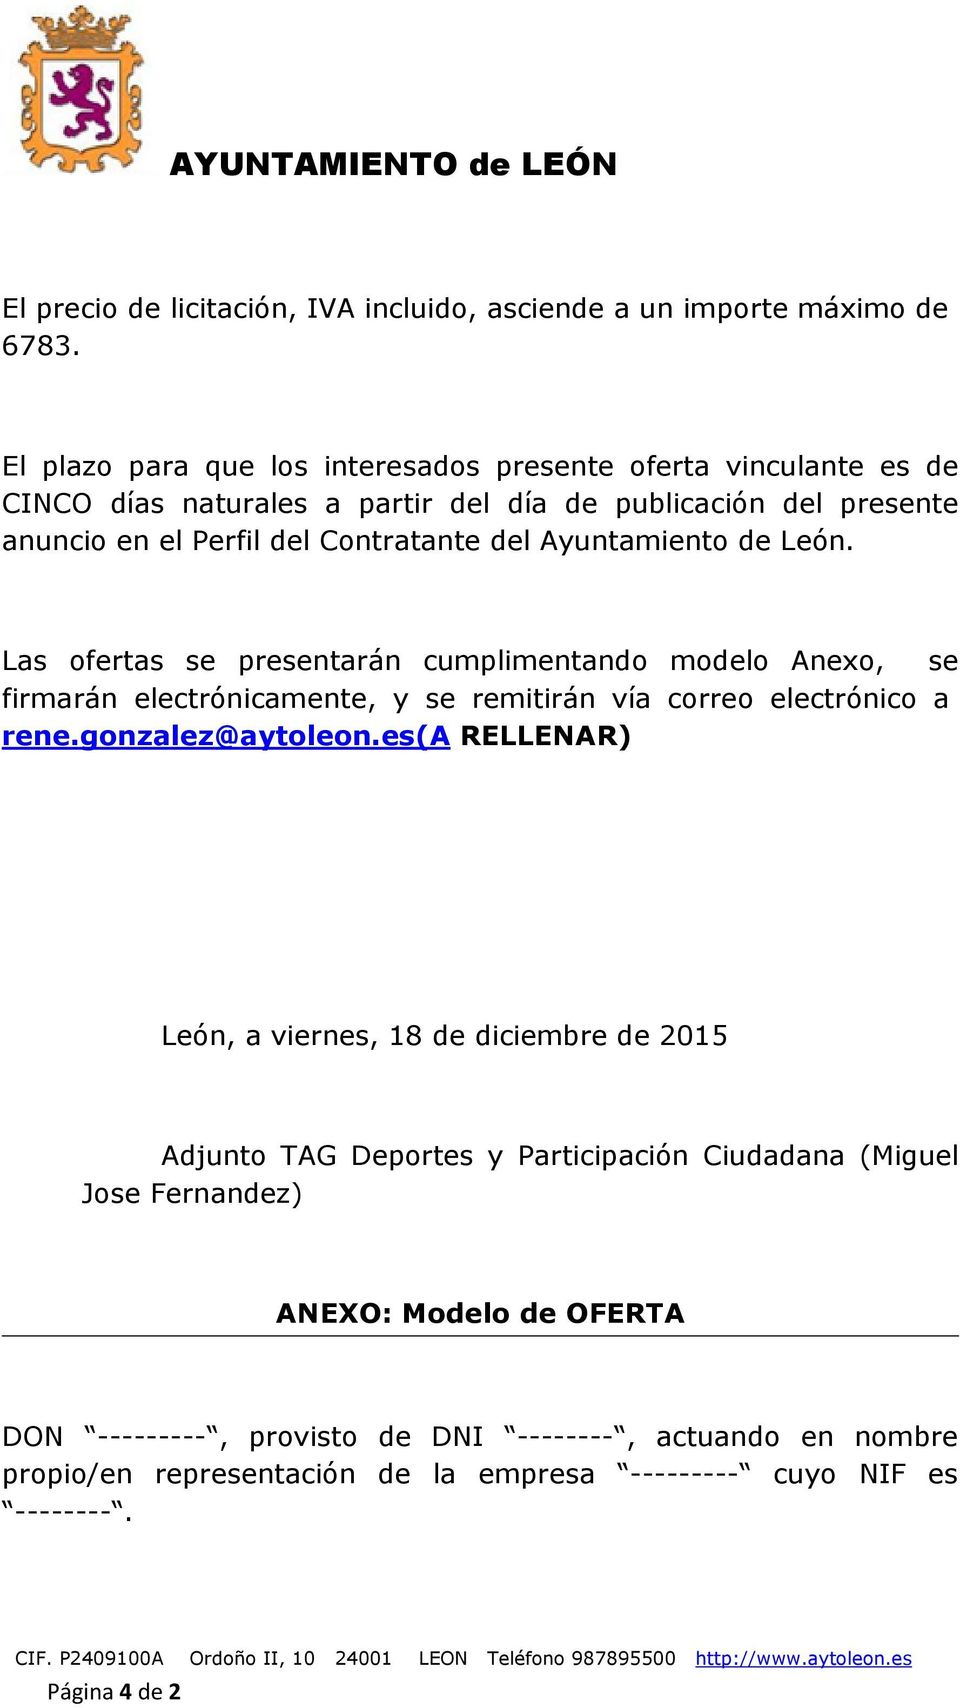 Ayuntamiento de León. Las ofertas se presentarán cumplimentando modelo Anexo, se firmarán electrónicamente, y se remitirán vía correo electrónico a rene.gonzalez@aytoleon.